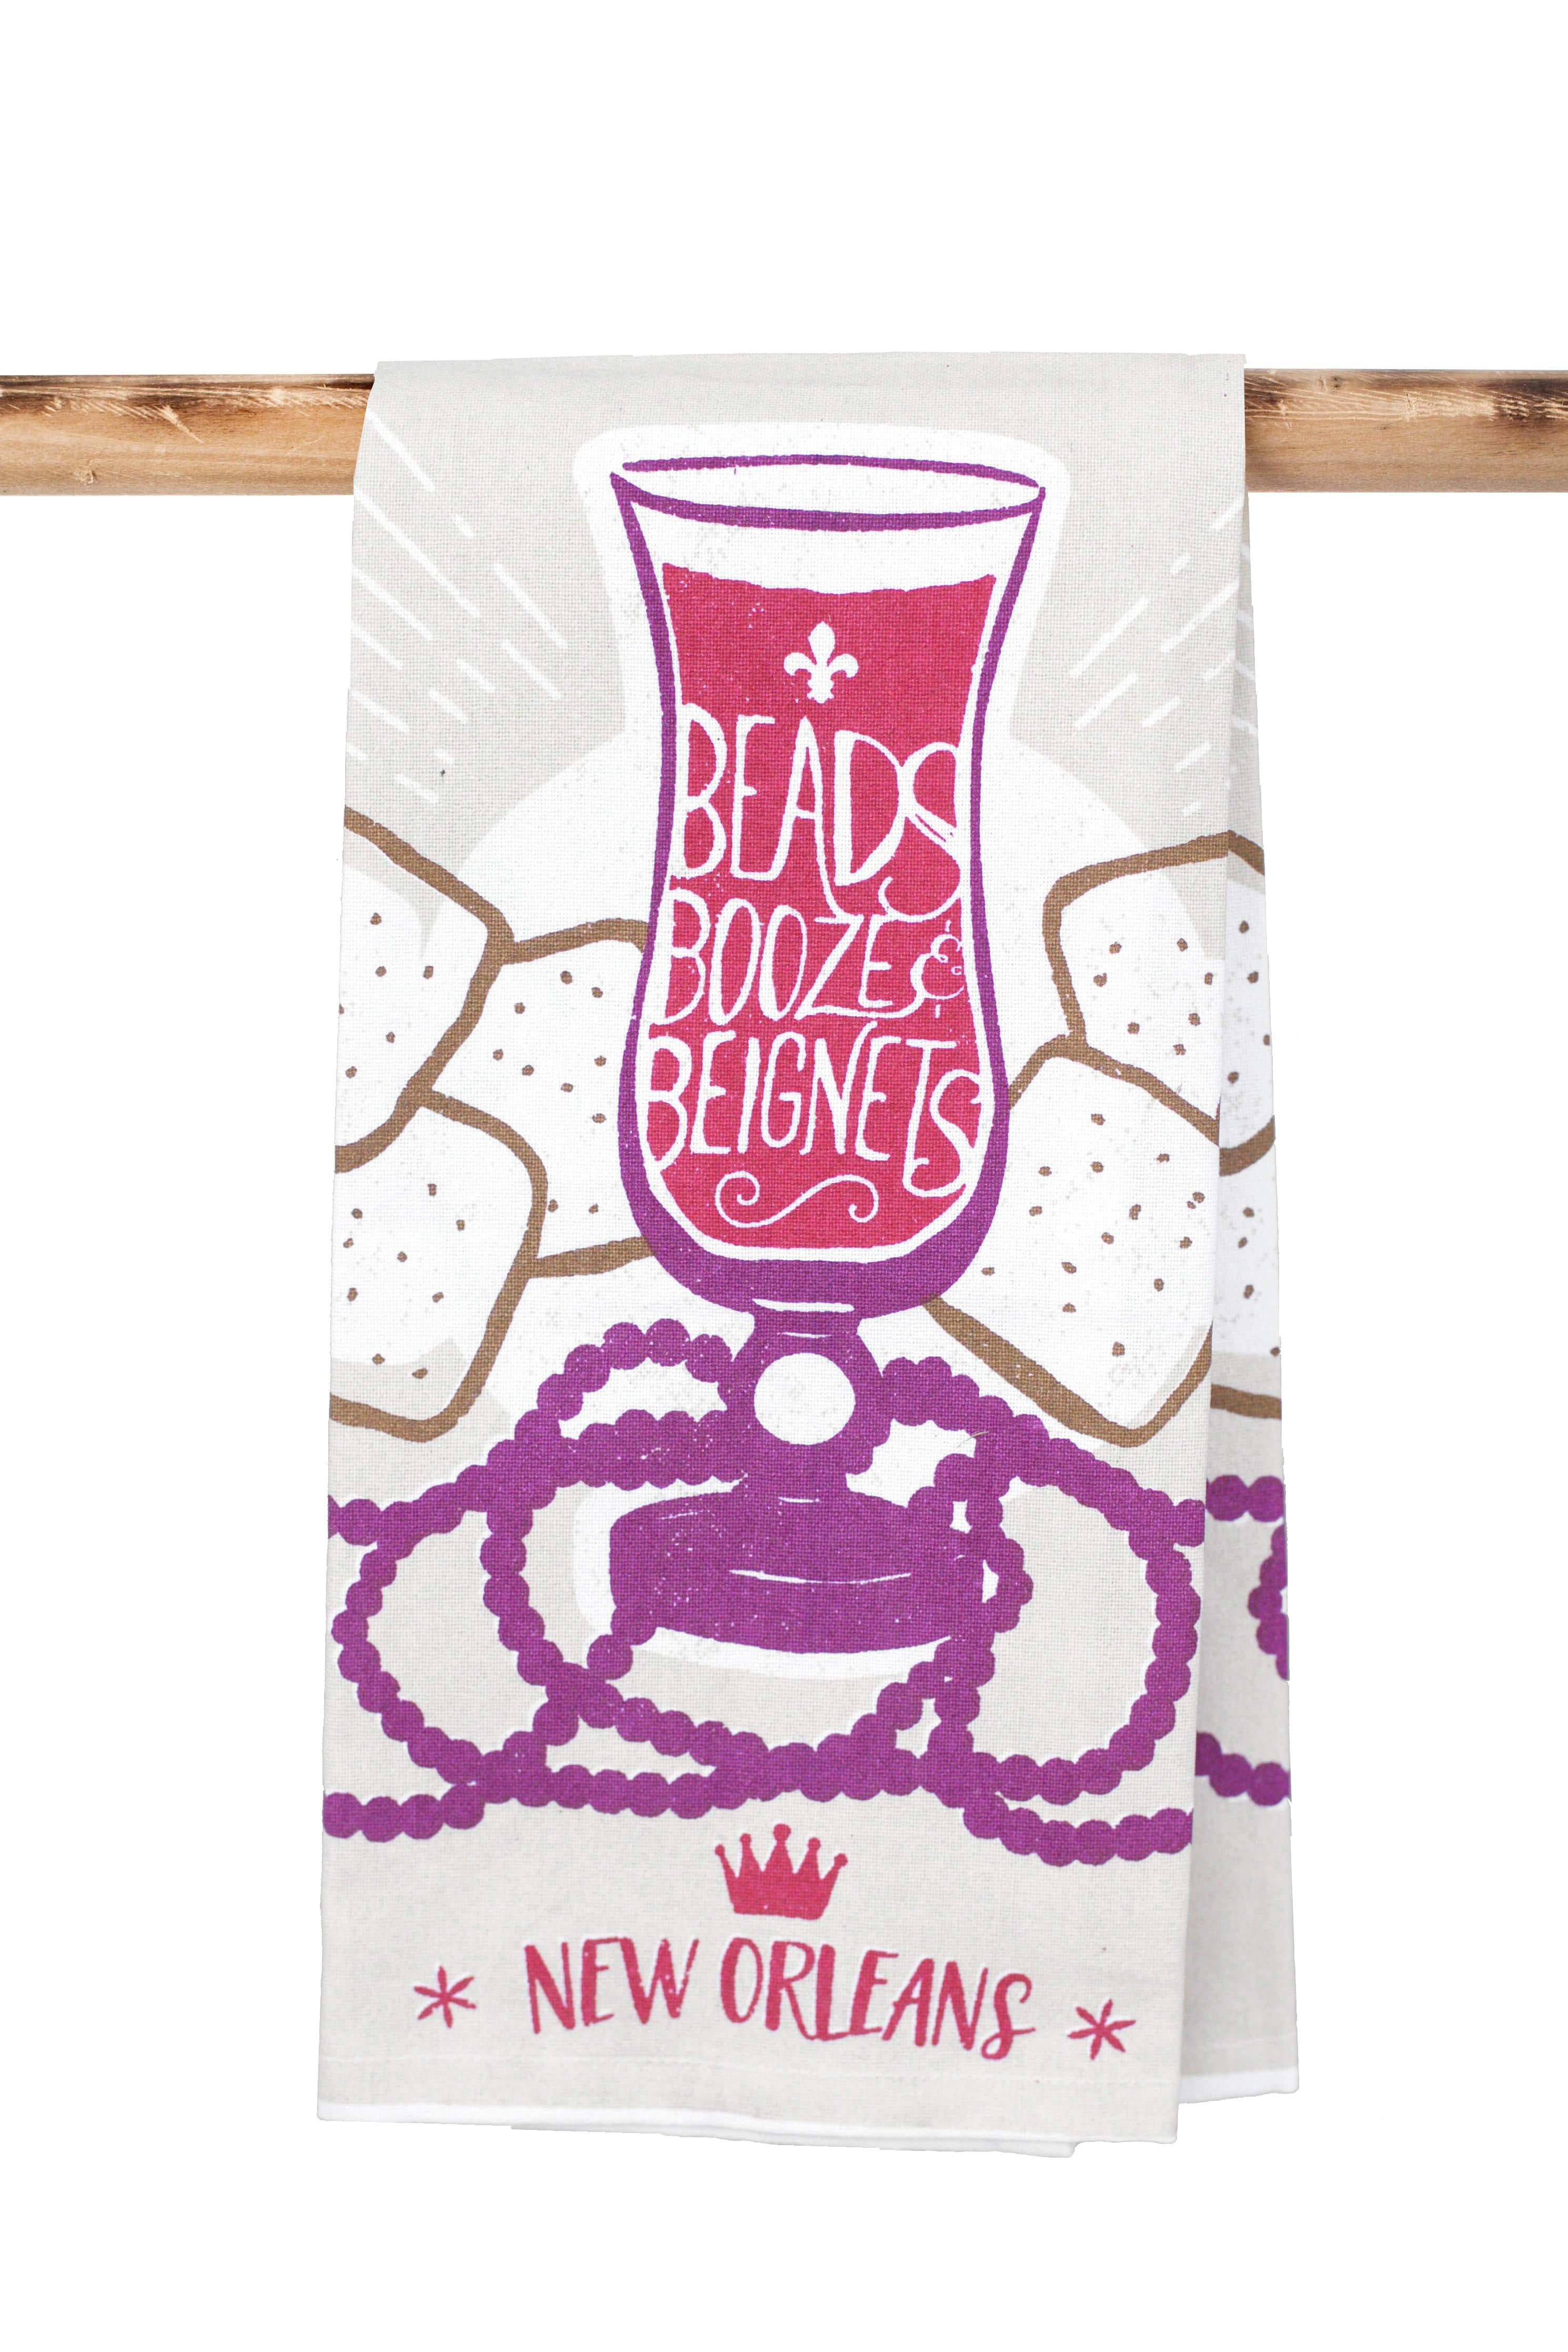 Second Line Ventures The Parish Line Beads Booze and Beignets Kitchen Towel - Little Miss Muffin Children & Home